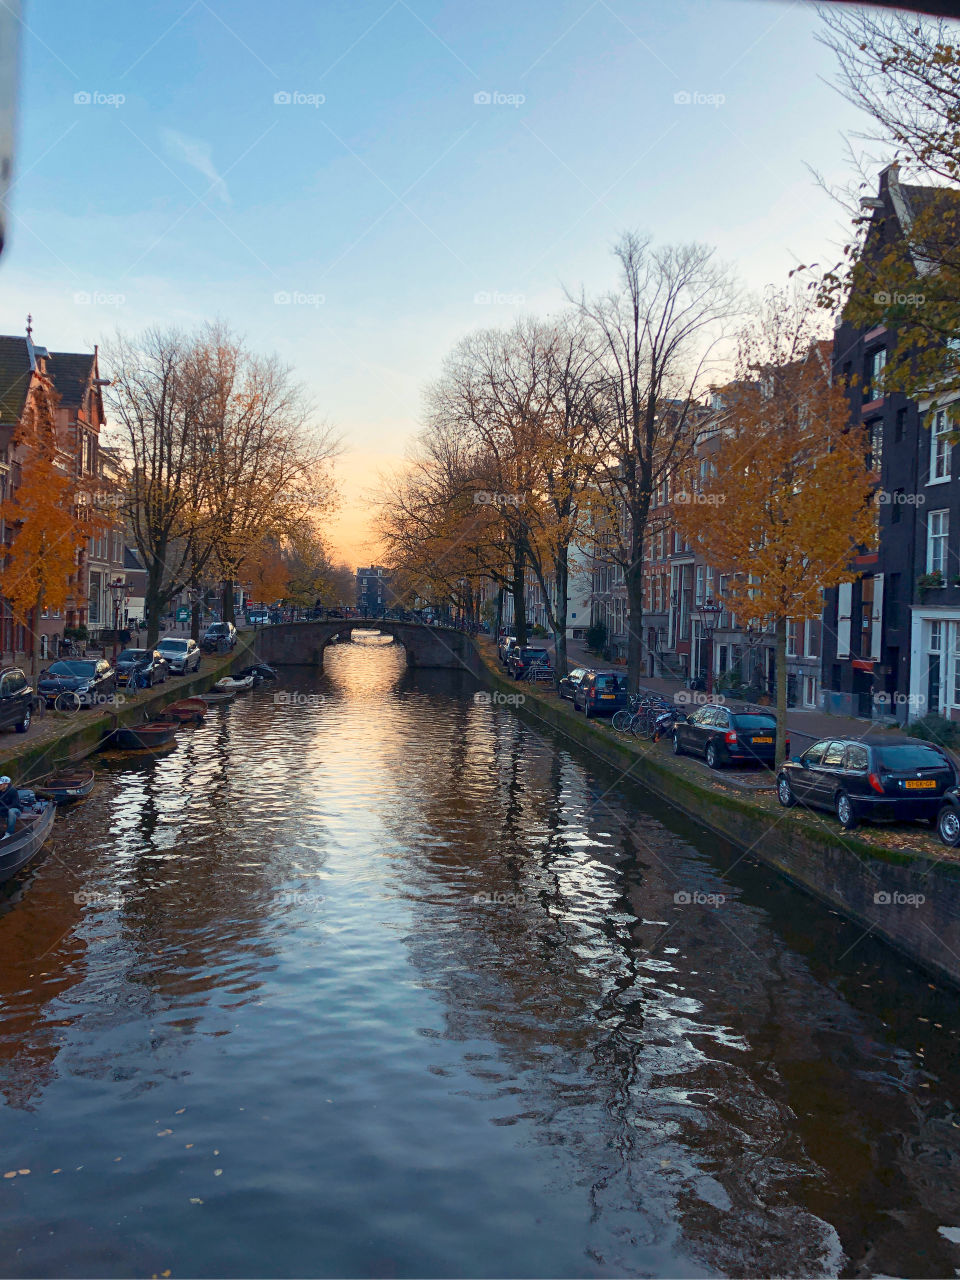 Amsterdam Canal 